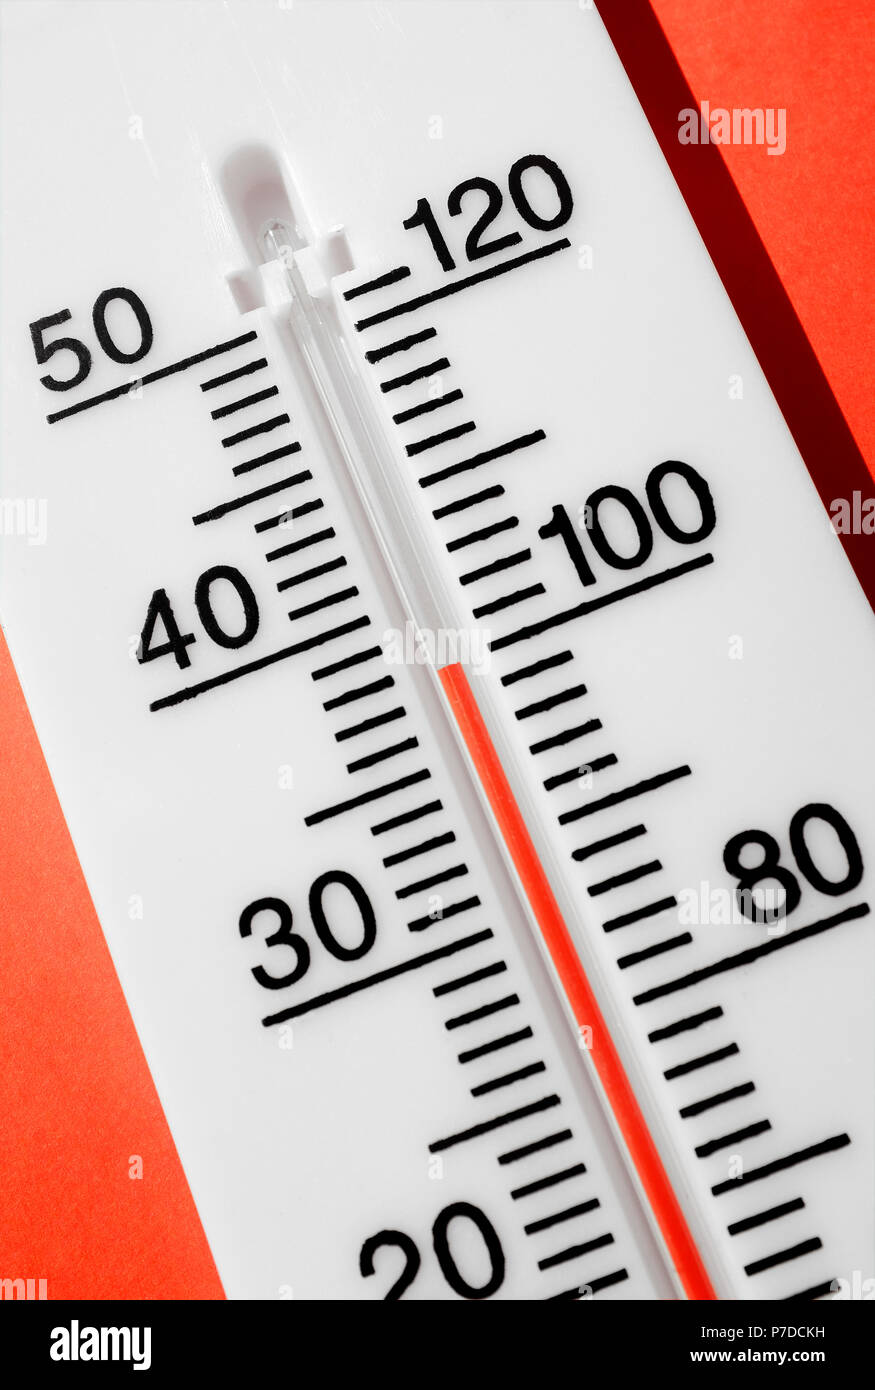 100 Grad Celsius auf Thermometer Stockfotografie - Alamy